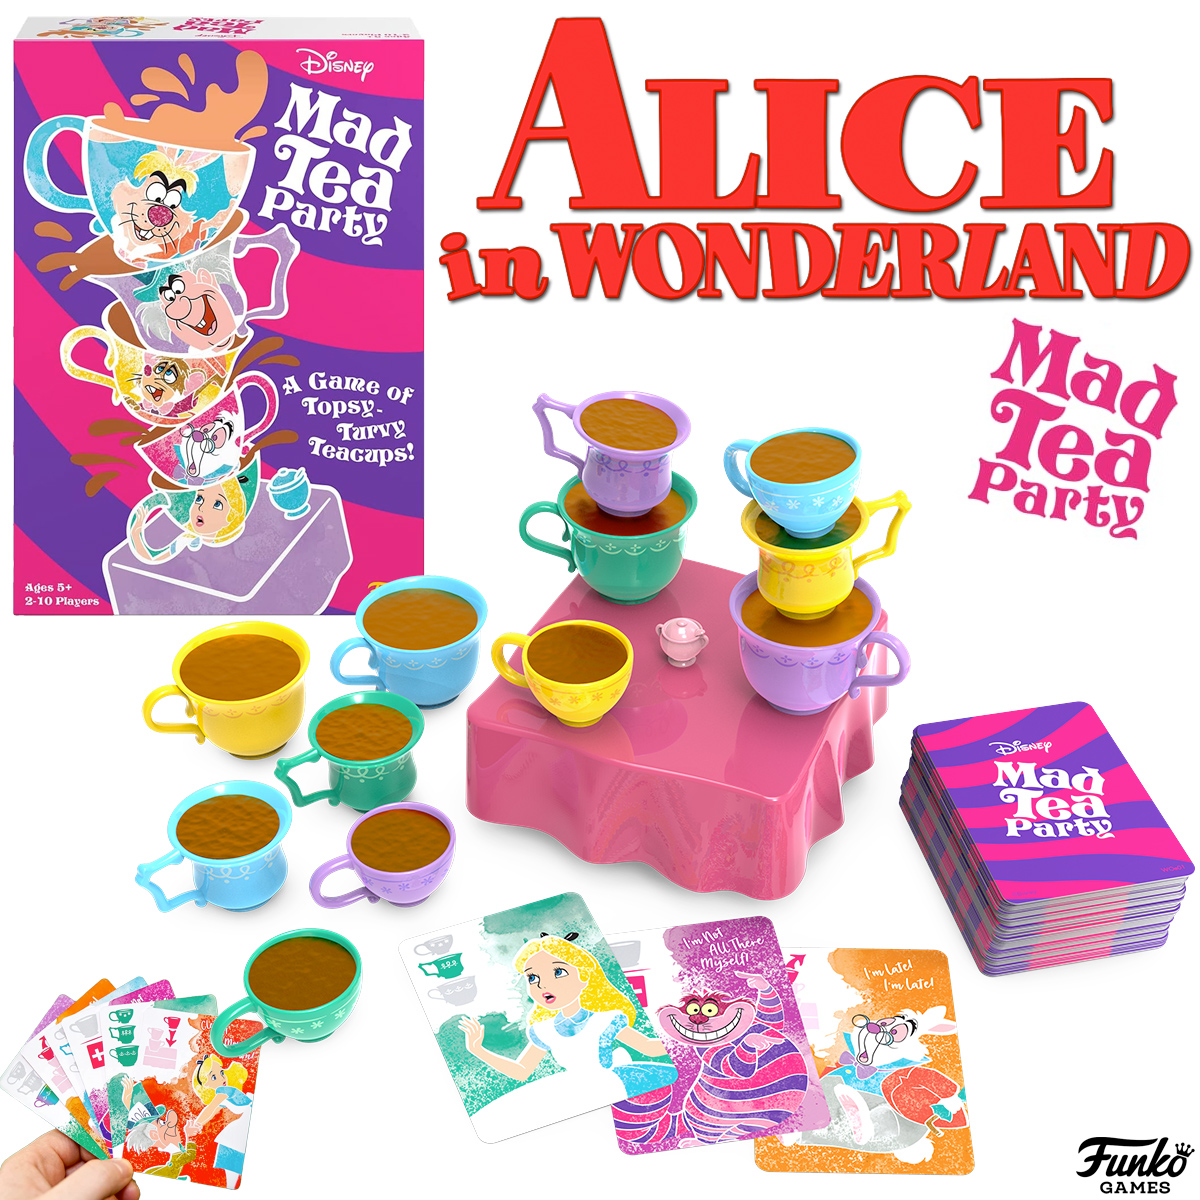 Jogo Alice no País das Maravilhas “Mad Tea Party” (Funko Games